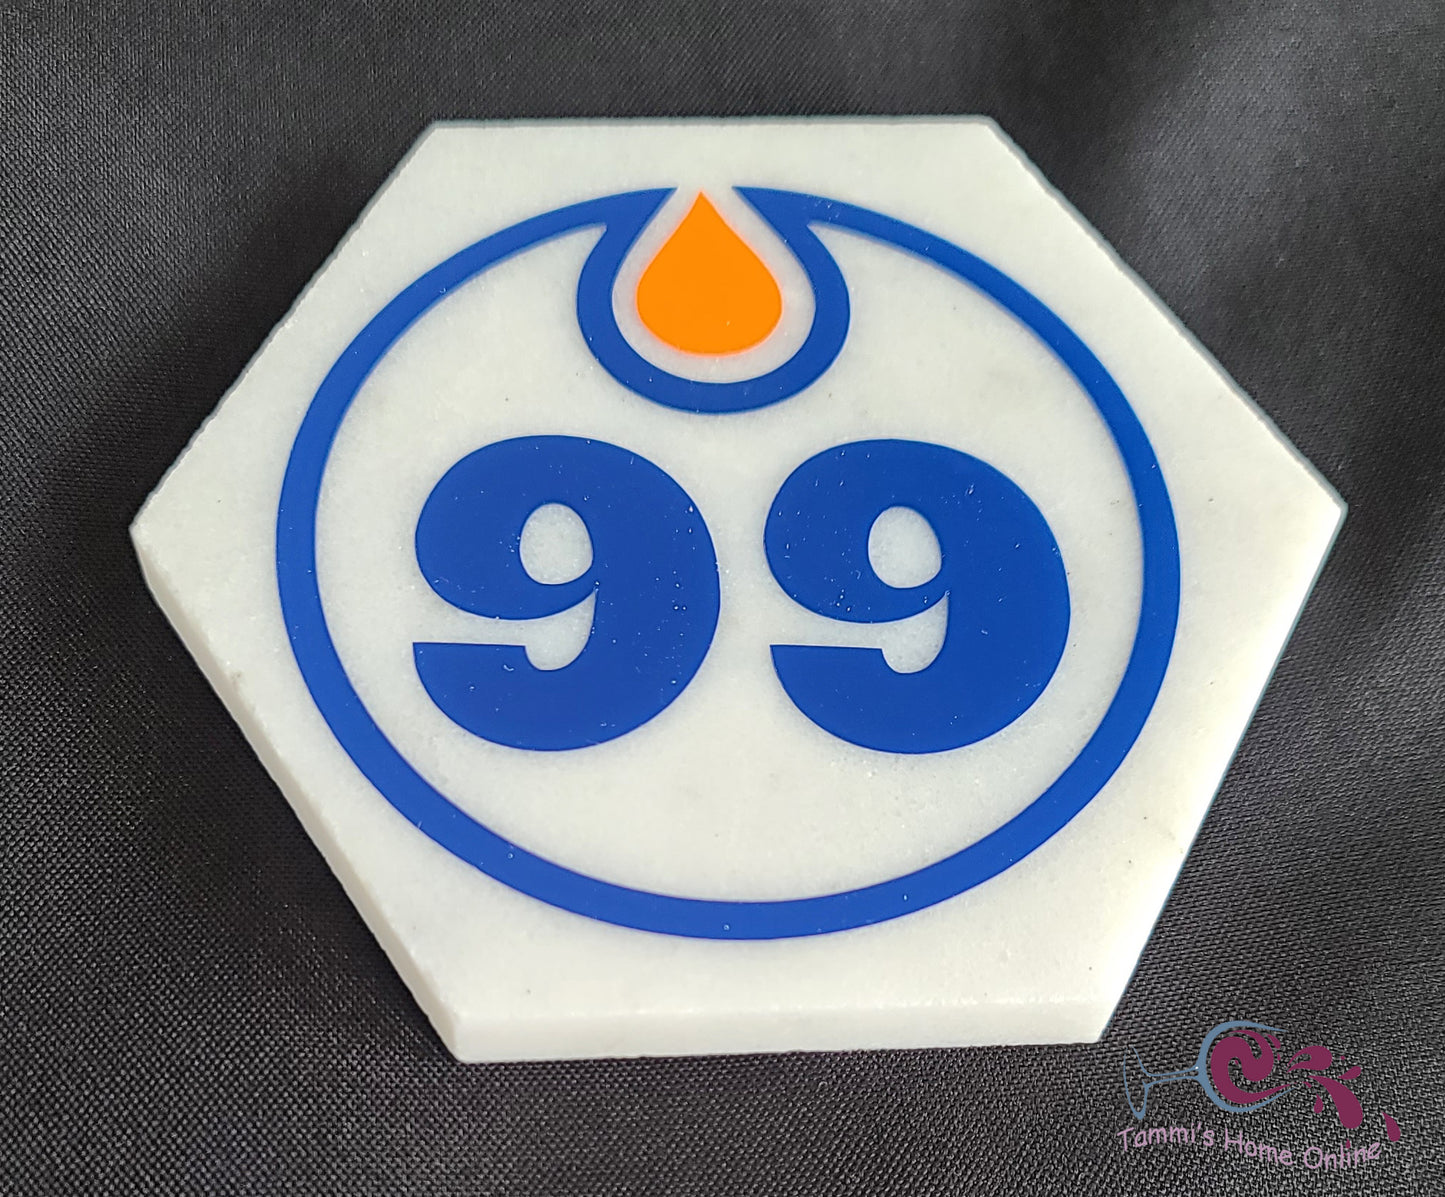 Edmonton Oilers Hockey #99 - Wayne Gretzky - Marble Coaster